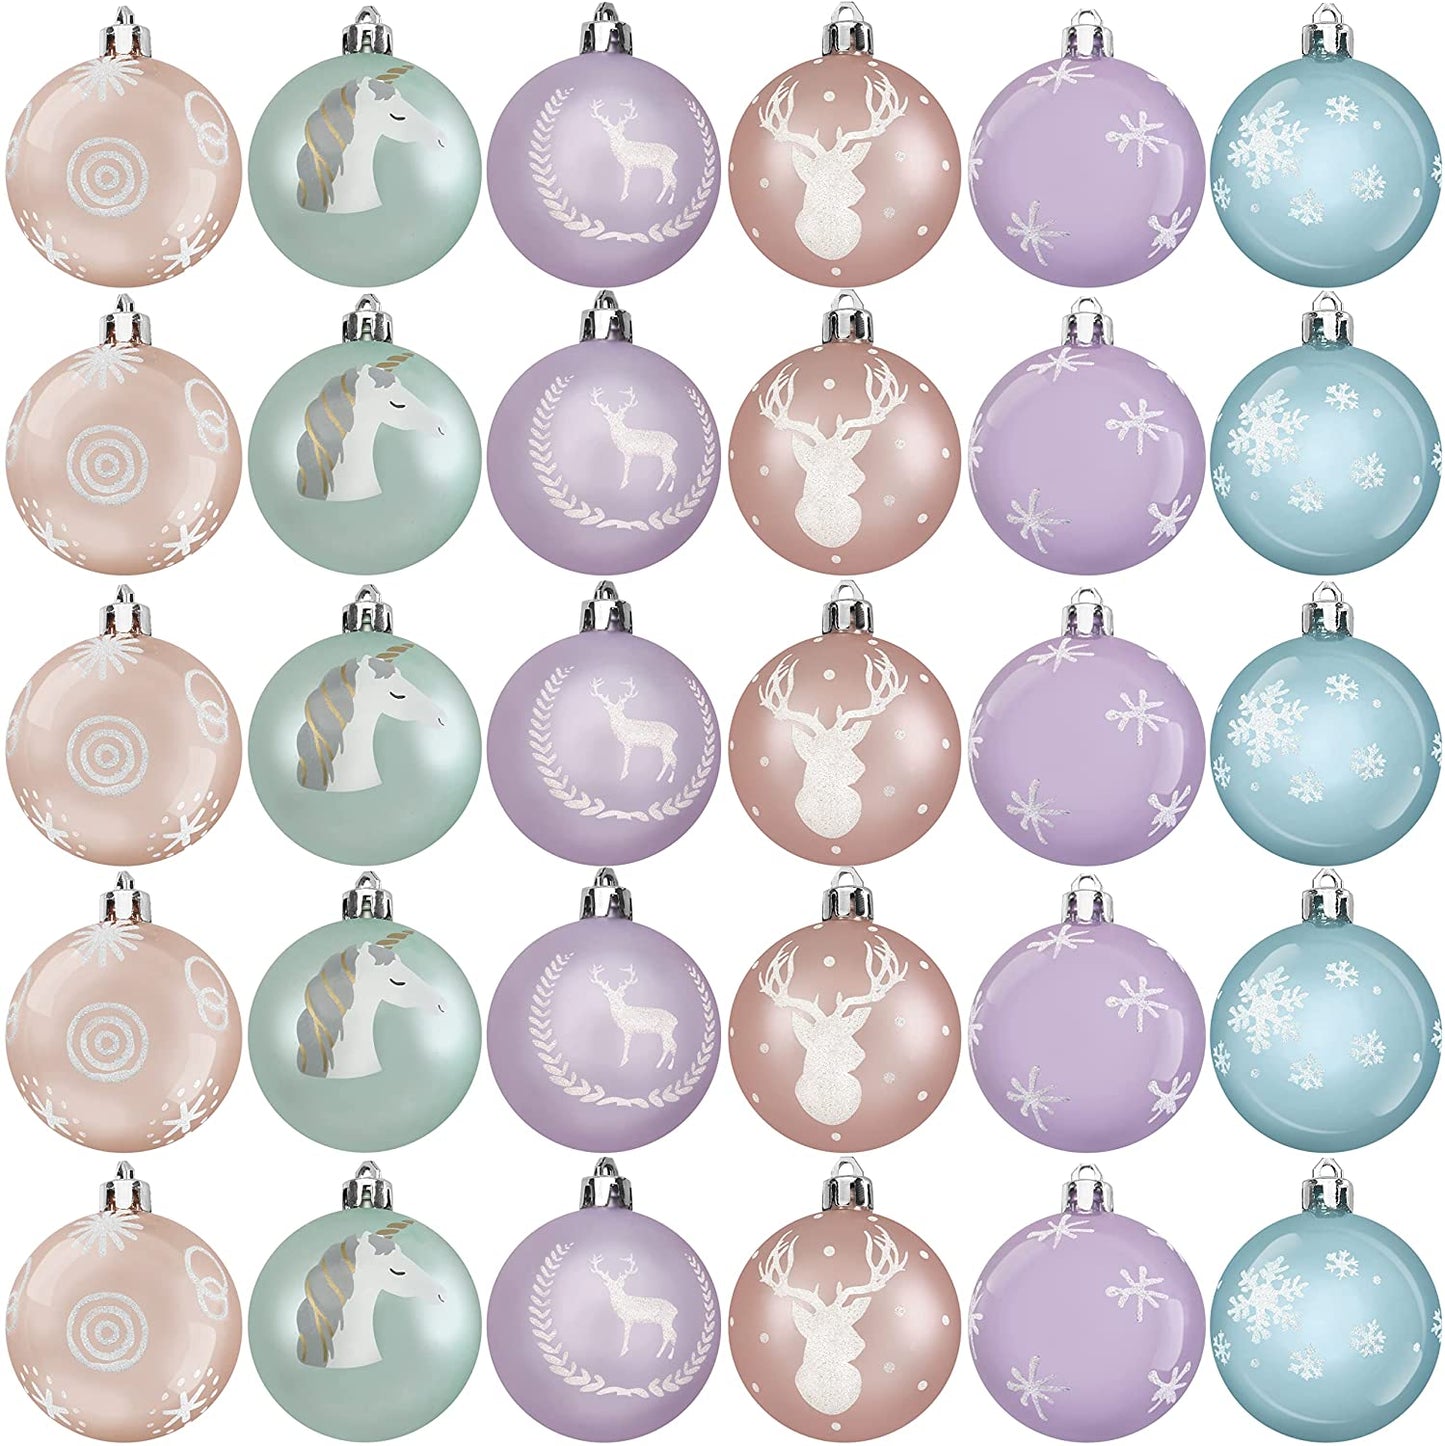 6CM Fantasy Christmas Ornaments Assorted Design 30 Pcs